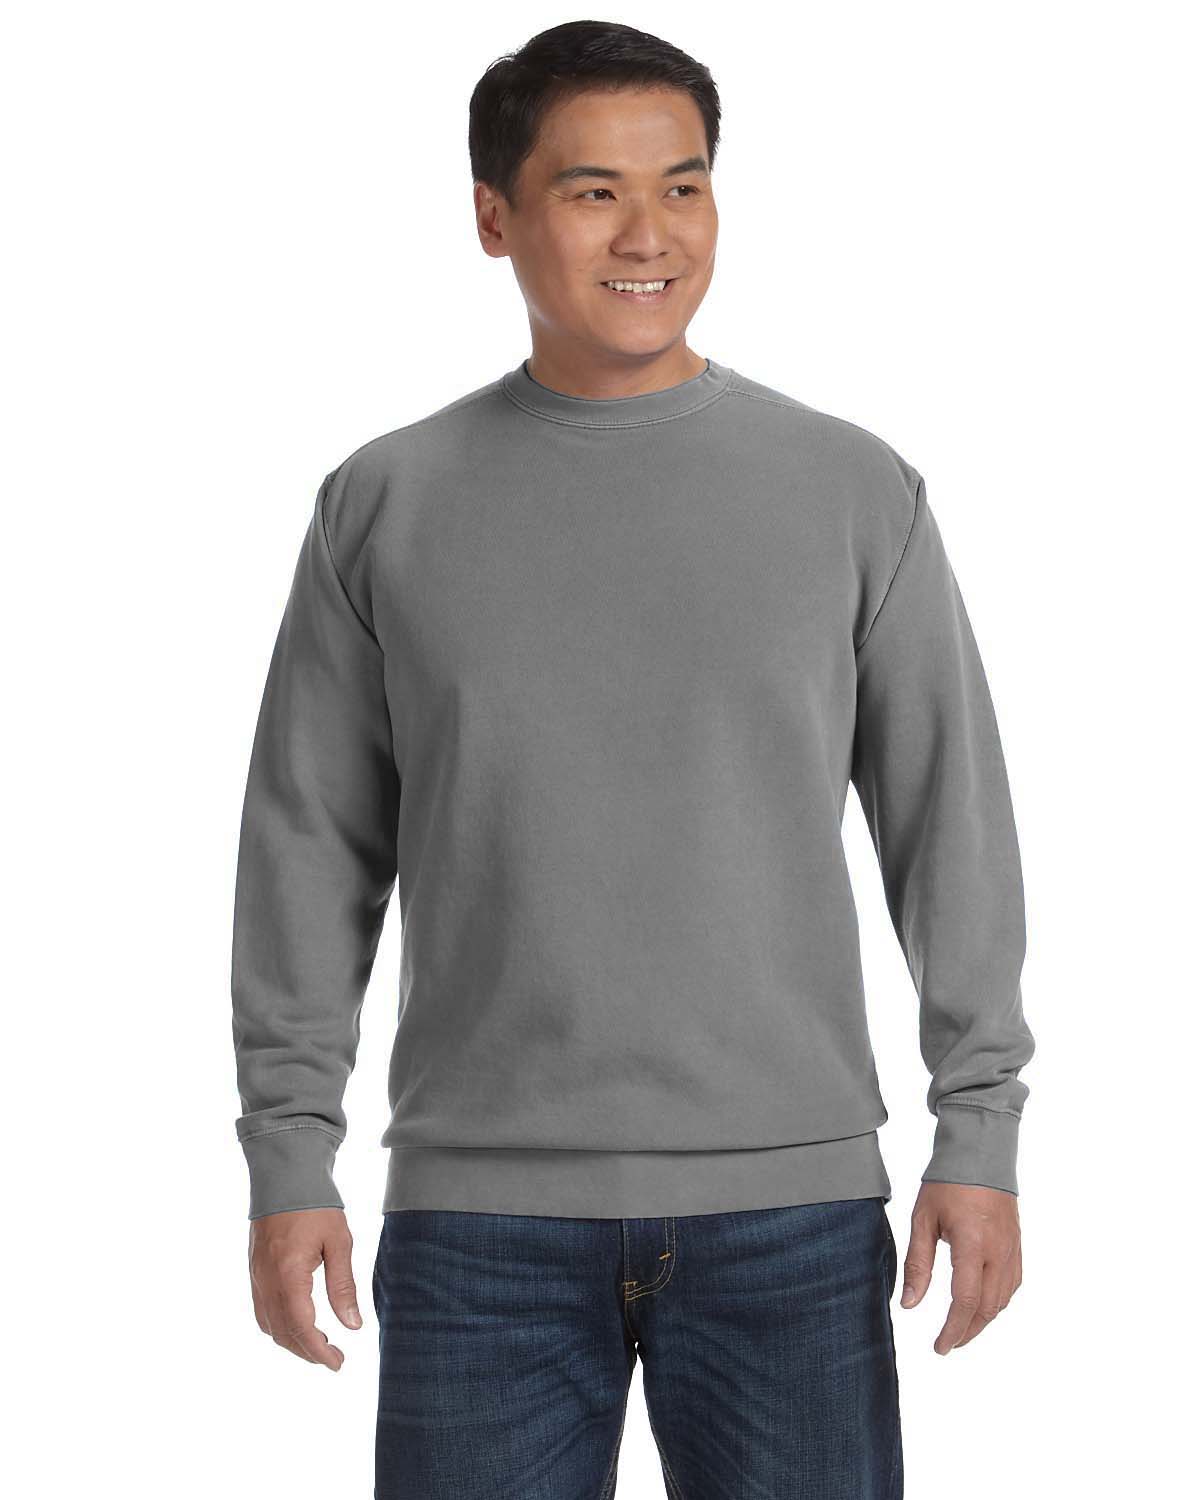 The Comfort Colors Adult Crewneck Sweatshirt - ORCHID - S